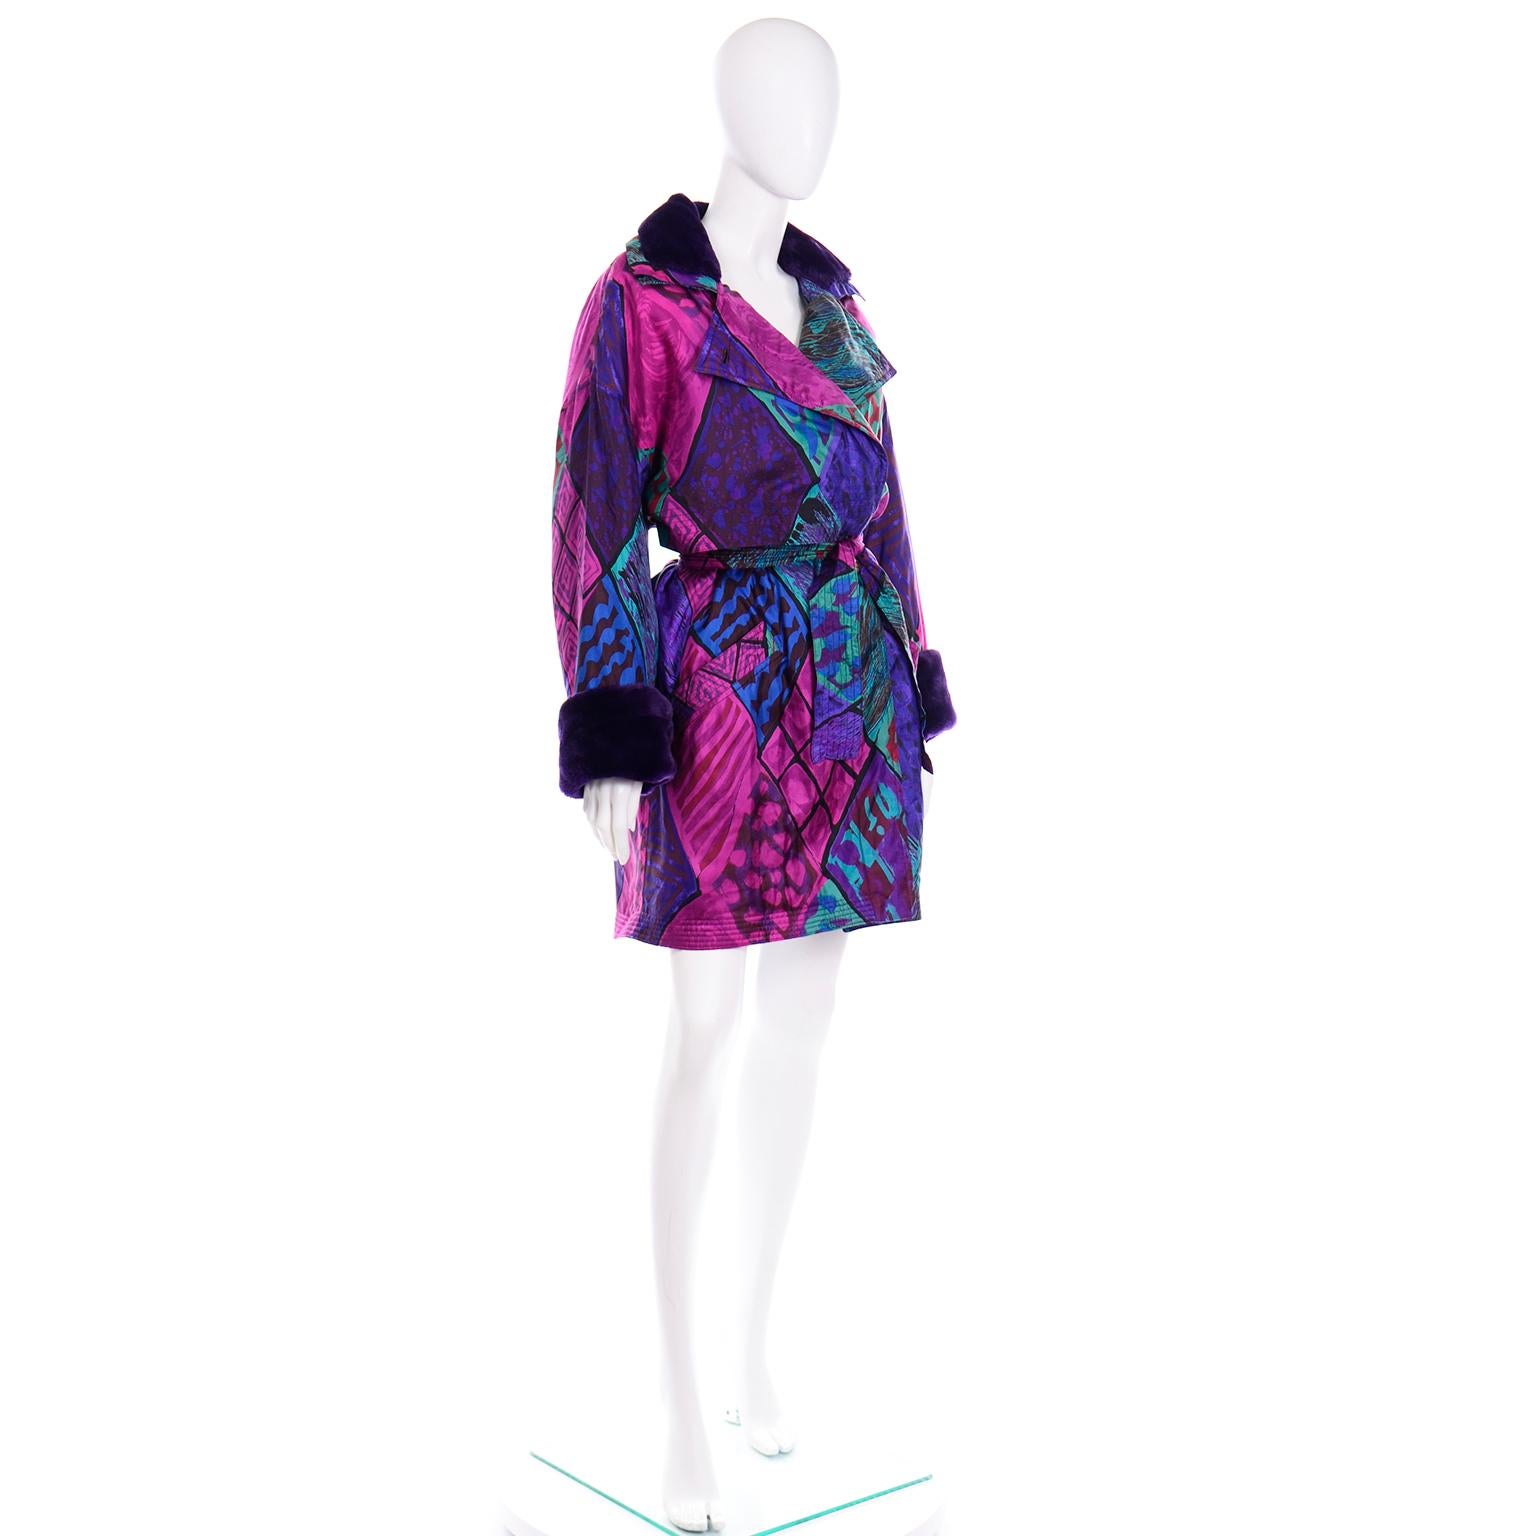 purple versace robe